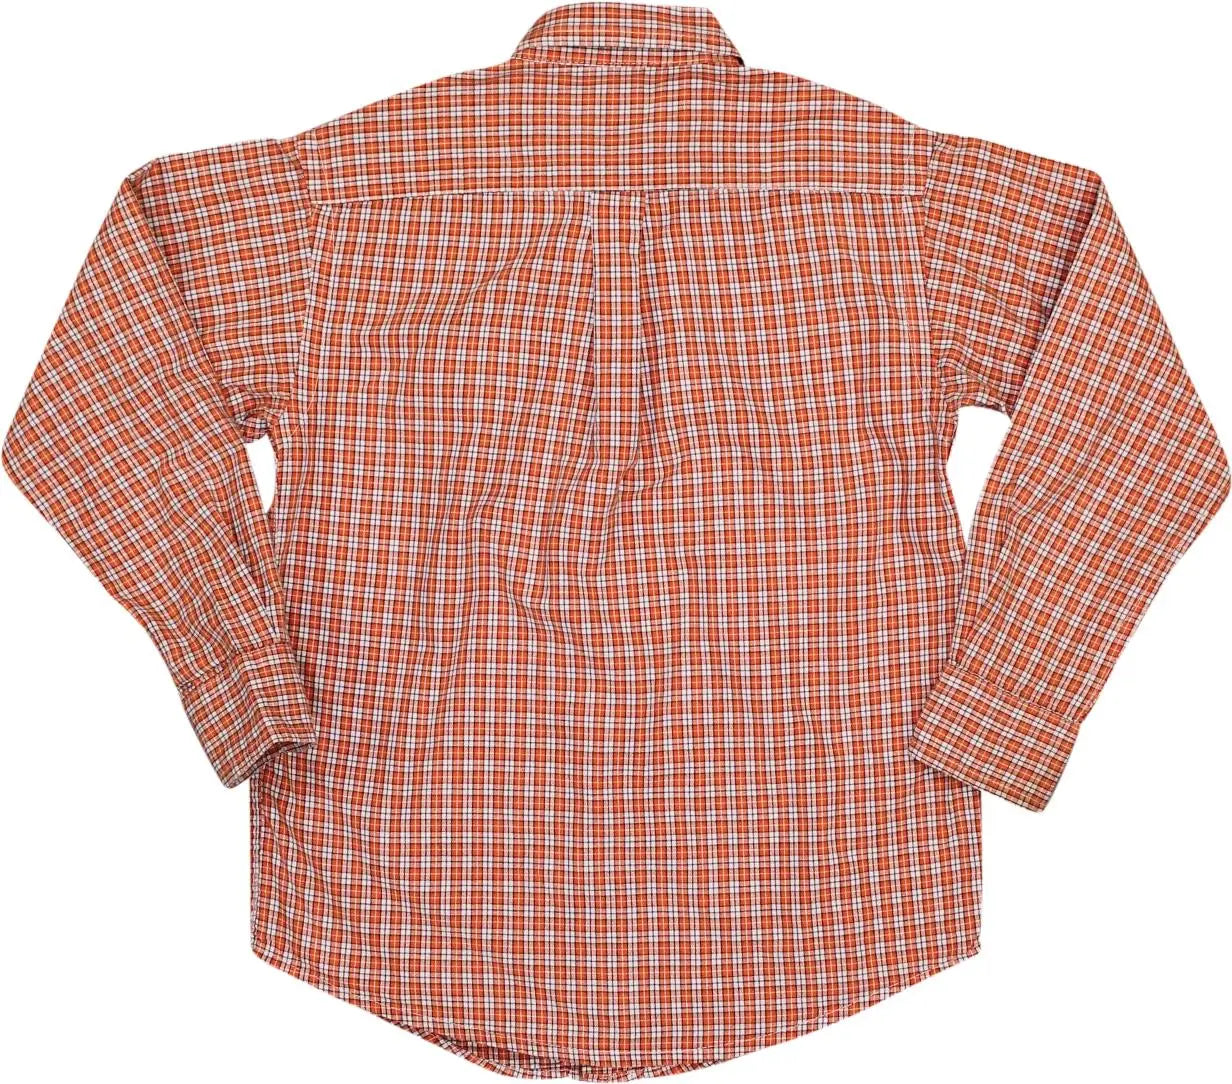 Ralph Lauren - Checked Orange Shirt by Ralph Lauren- ThriftTale.com - Vintage and second handclothing